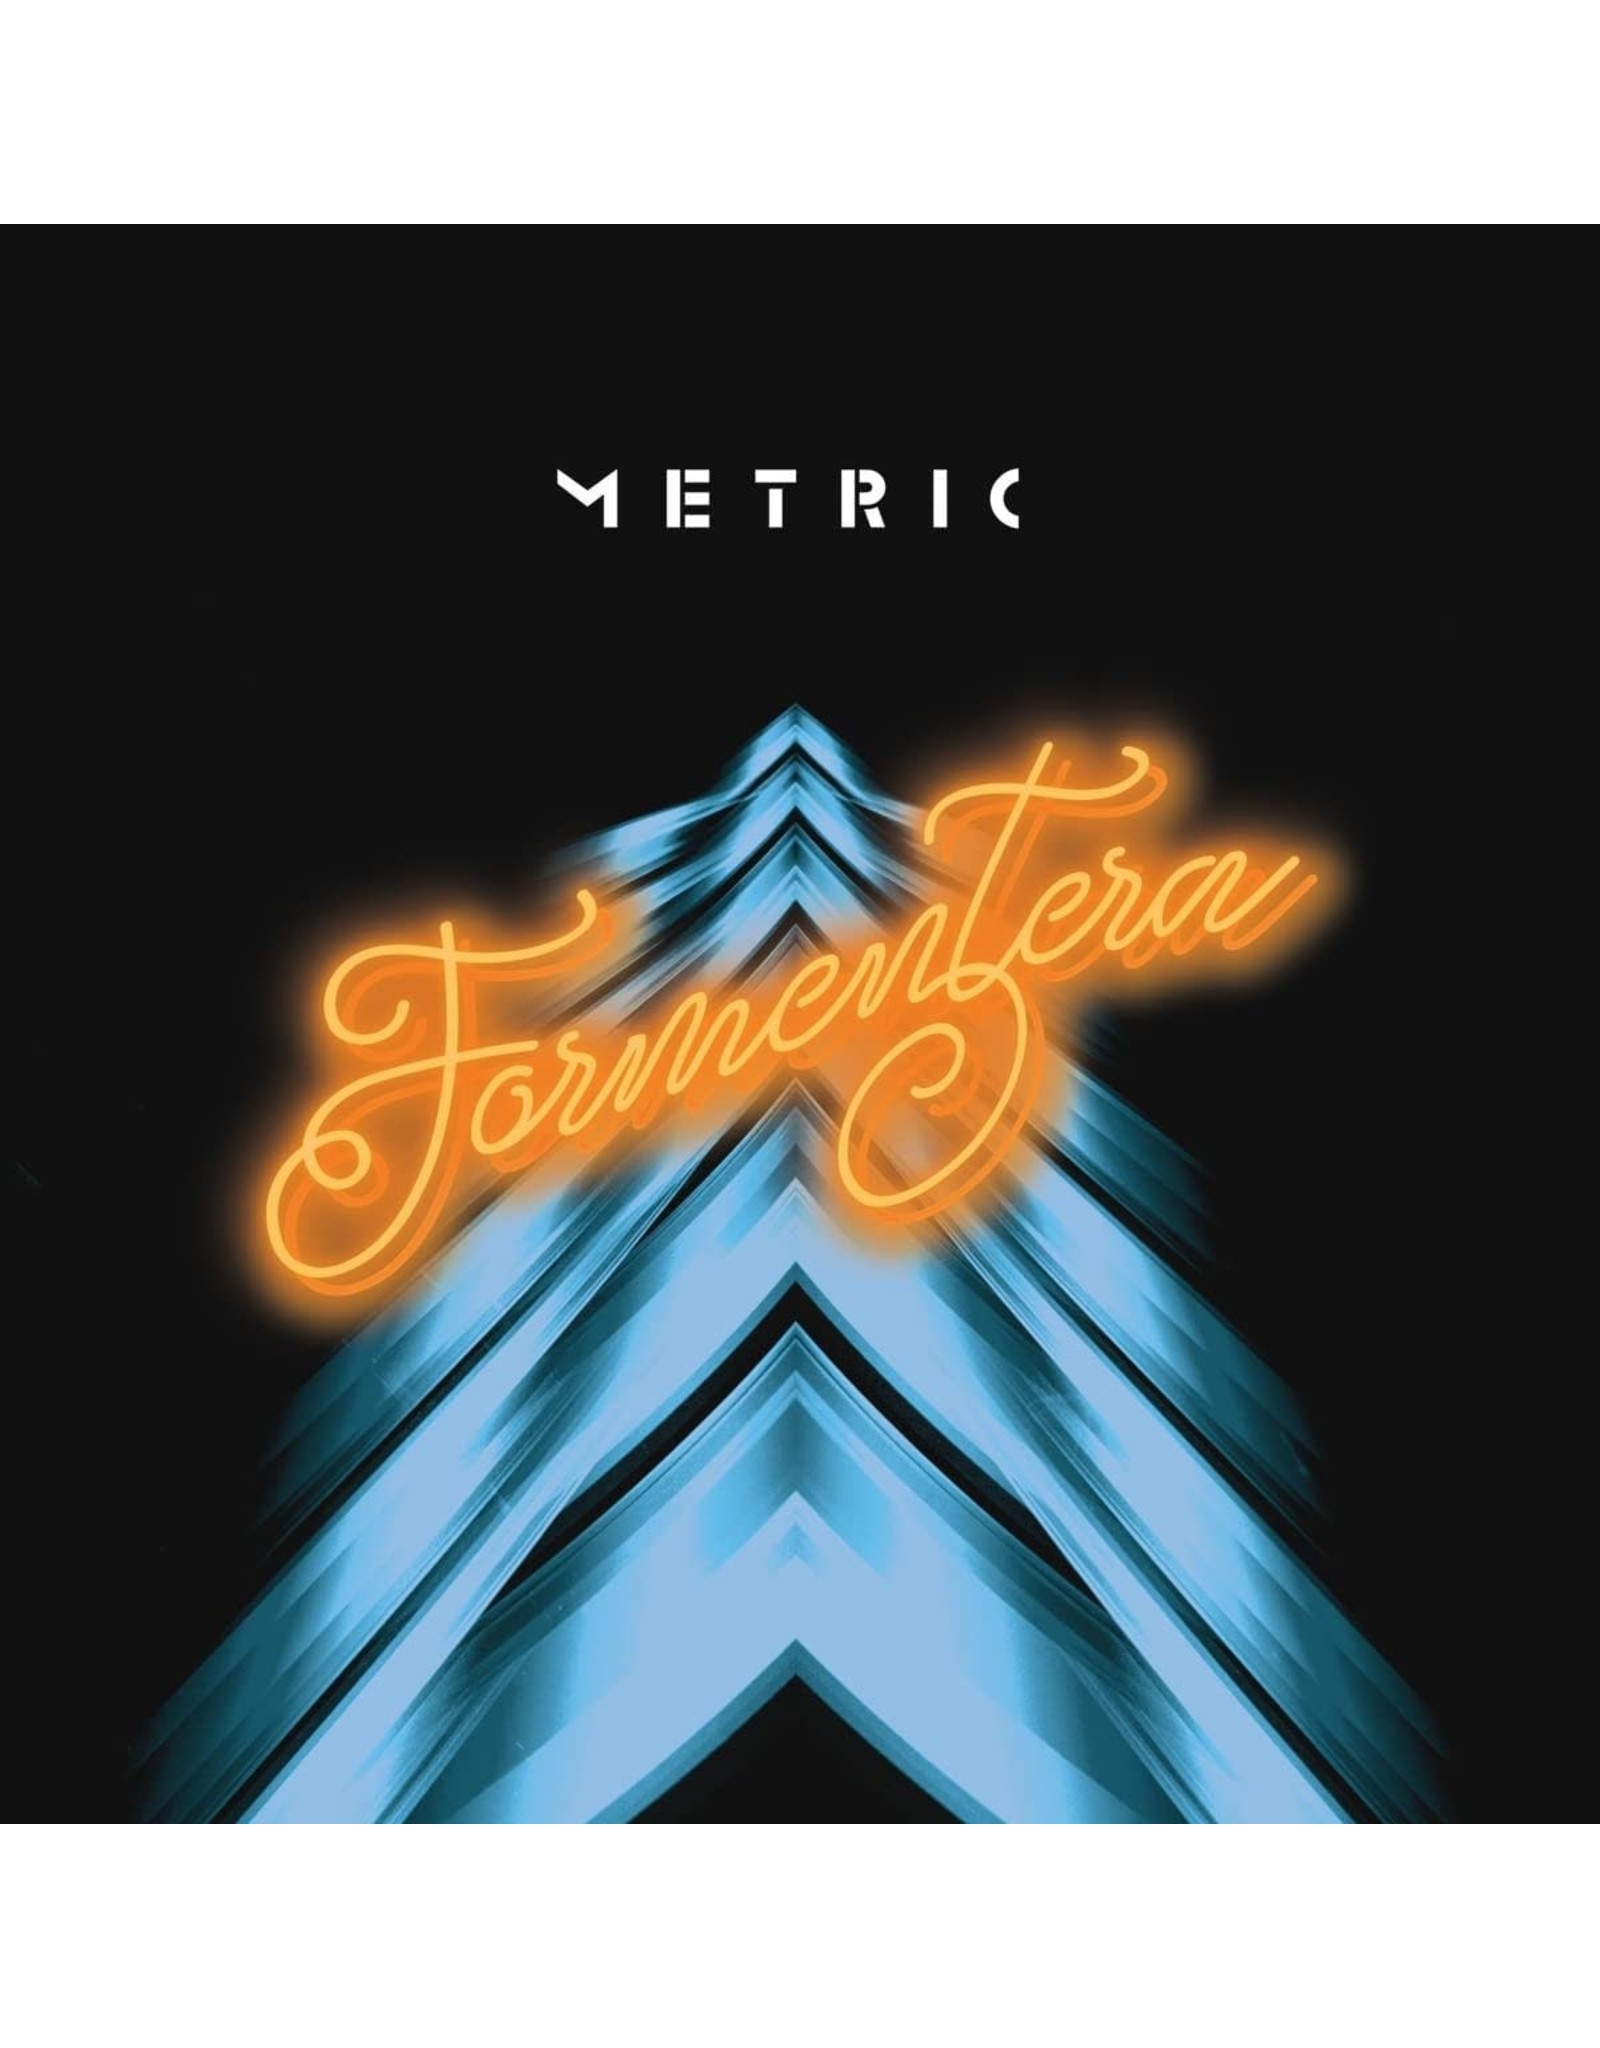 Metric - Formentera (Exclusive Sky Blue Vinyl)